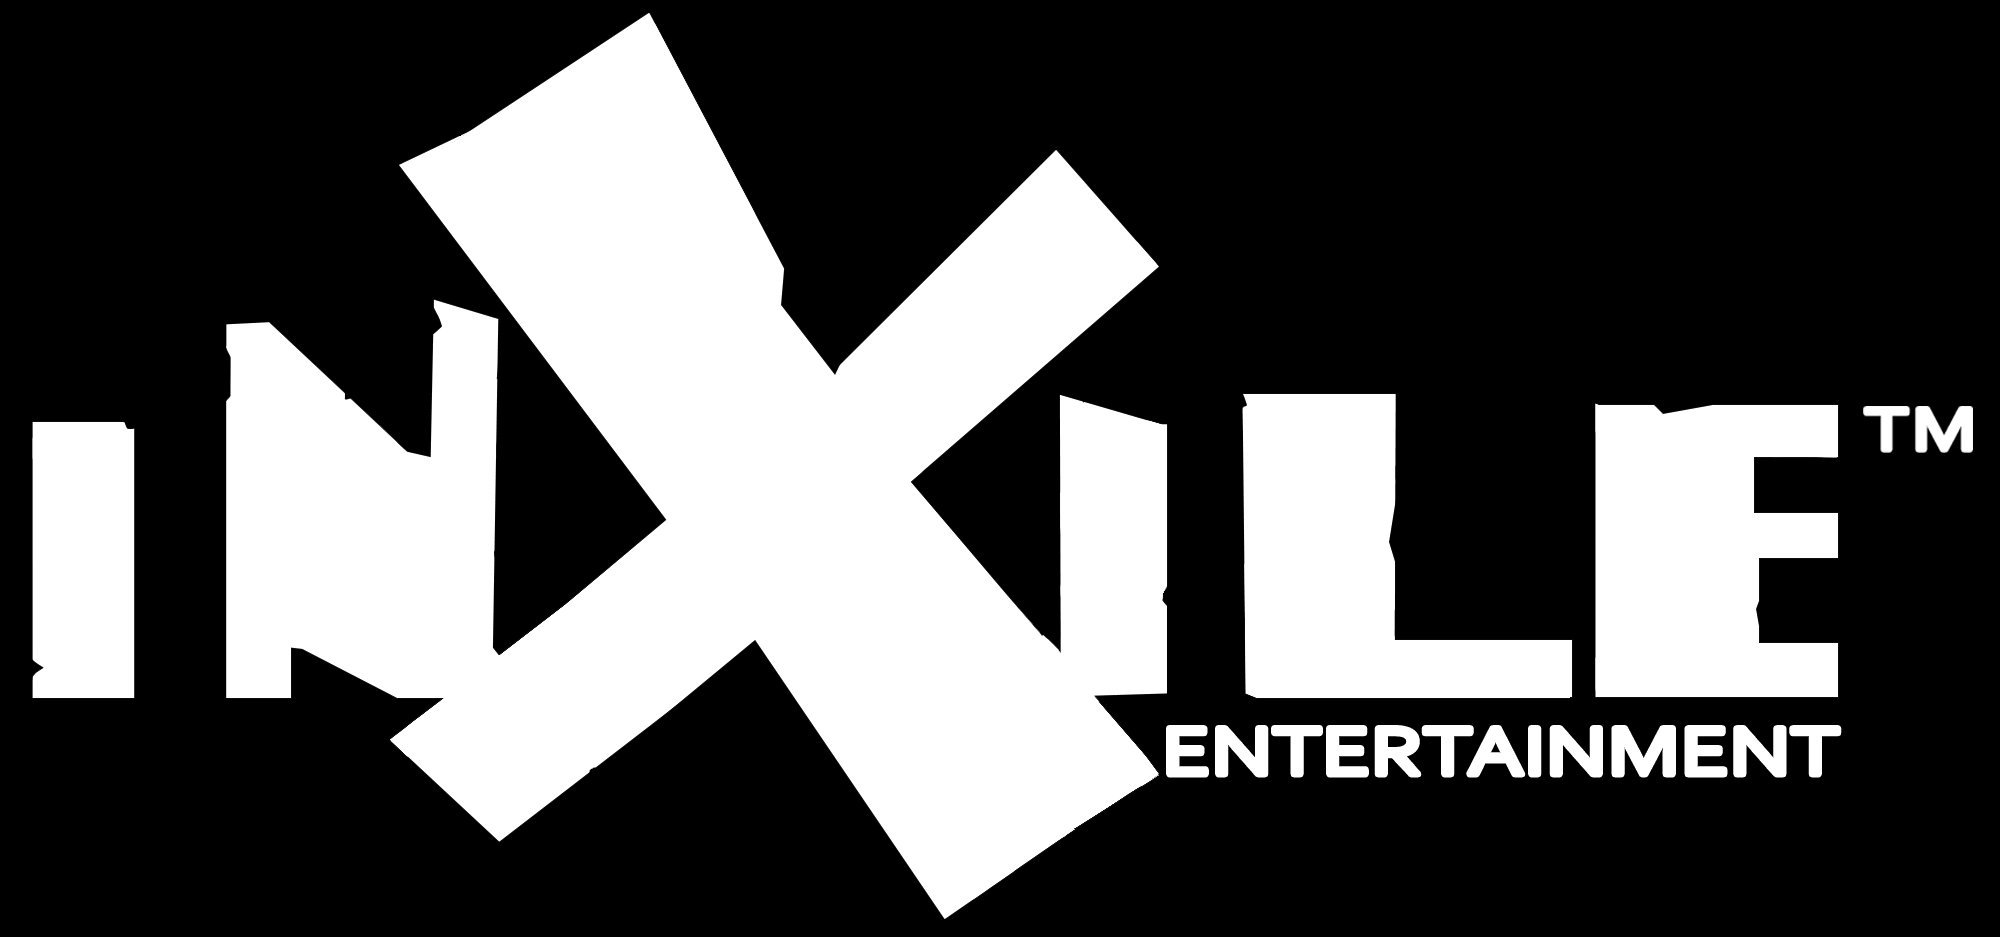 inxile-entertainment-logo.jpg